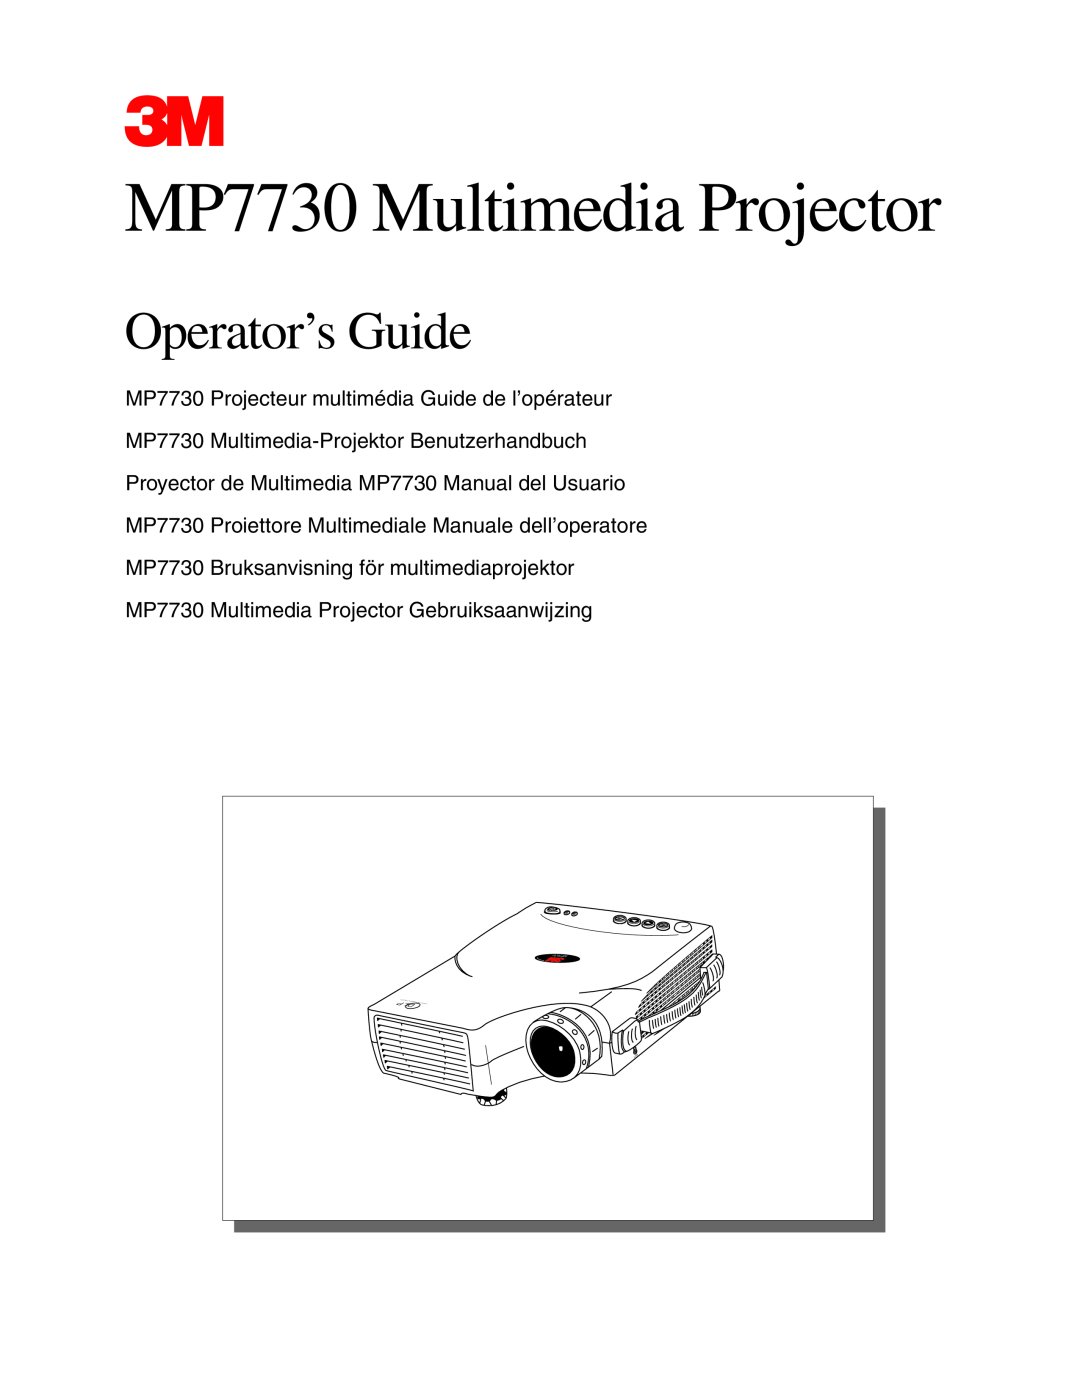 3M manual MP7730 Projecteur multimédia Guide de l’opérateur, MP7730 Multimedia-Projektor Benutzerhandbuch, P7630M 